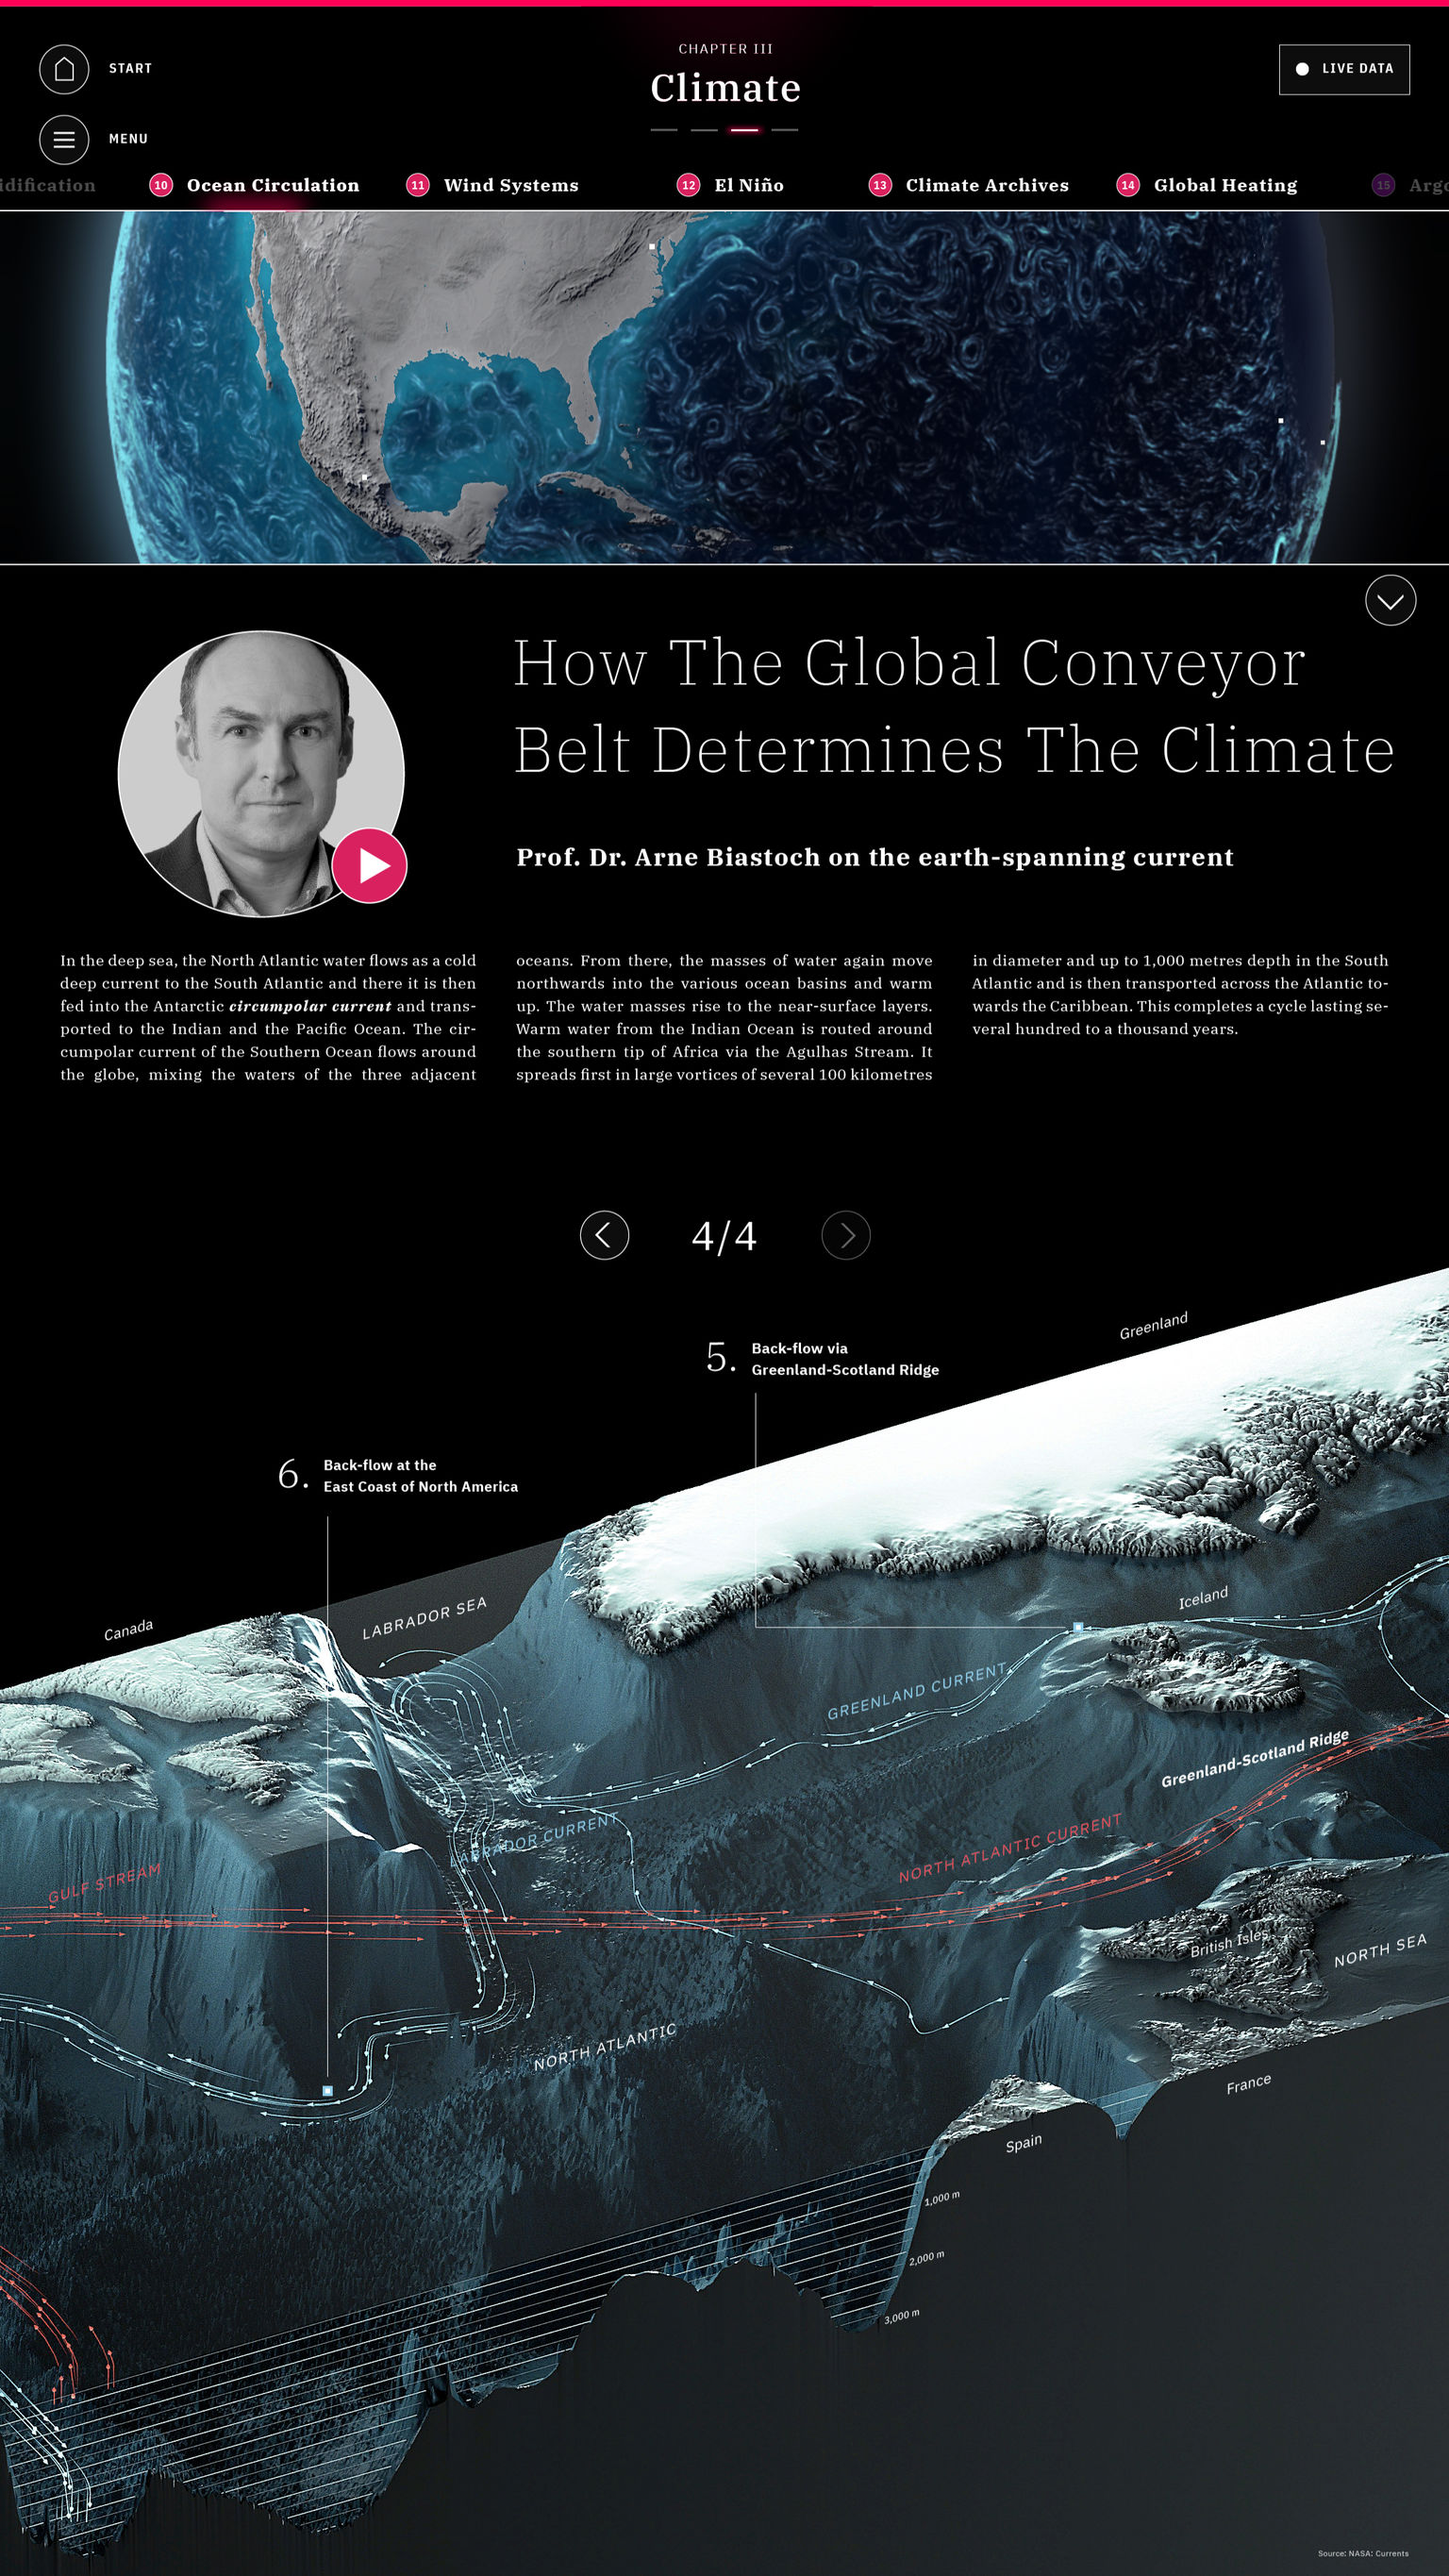 Explore the Ocean – Interactive Scientific Poster